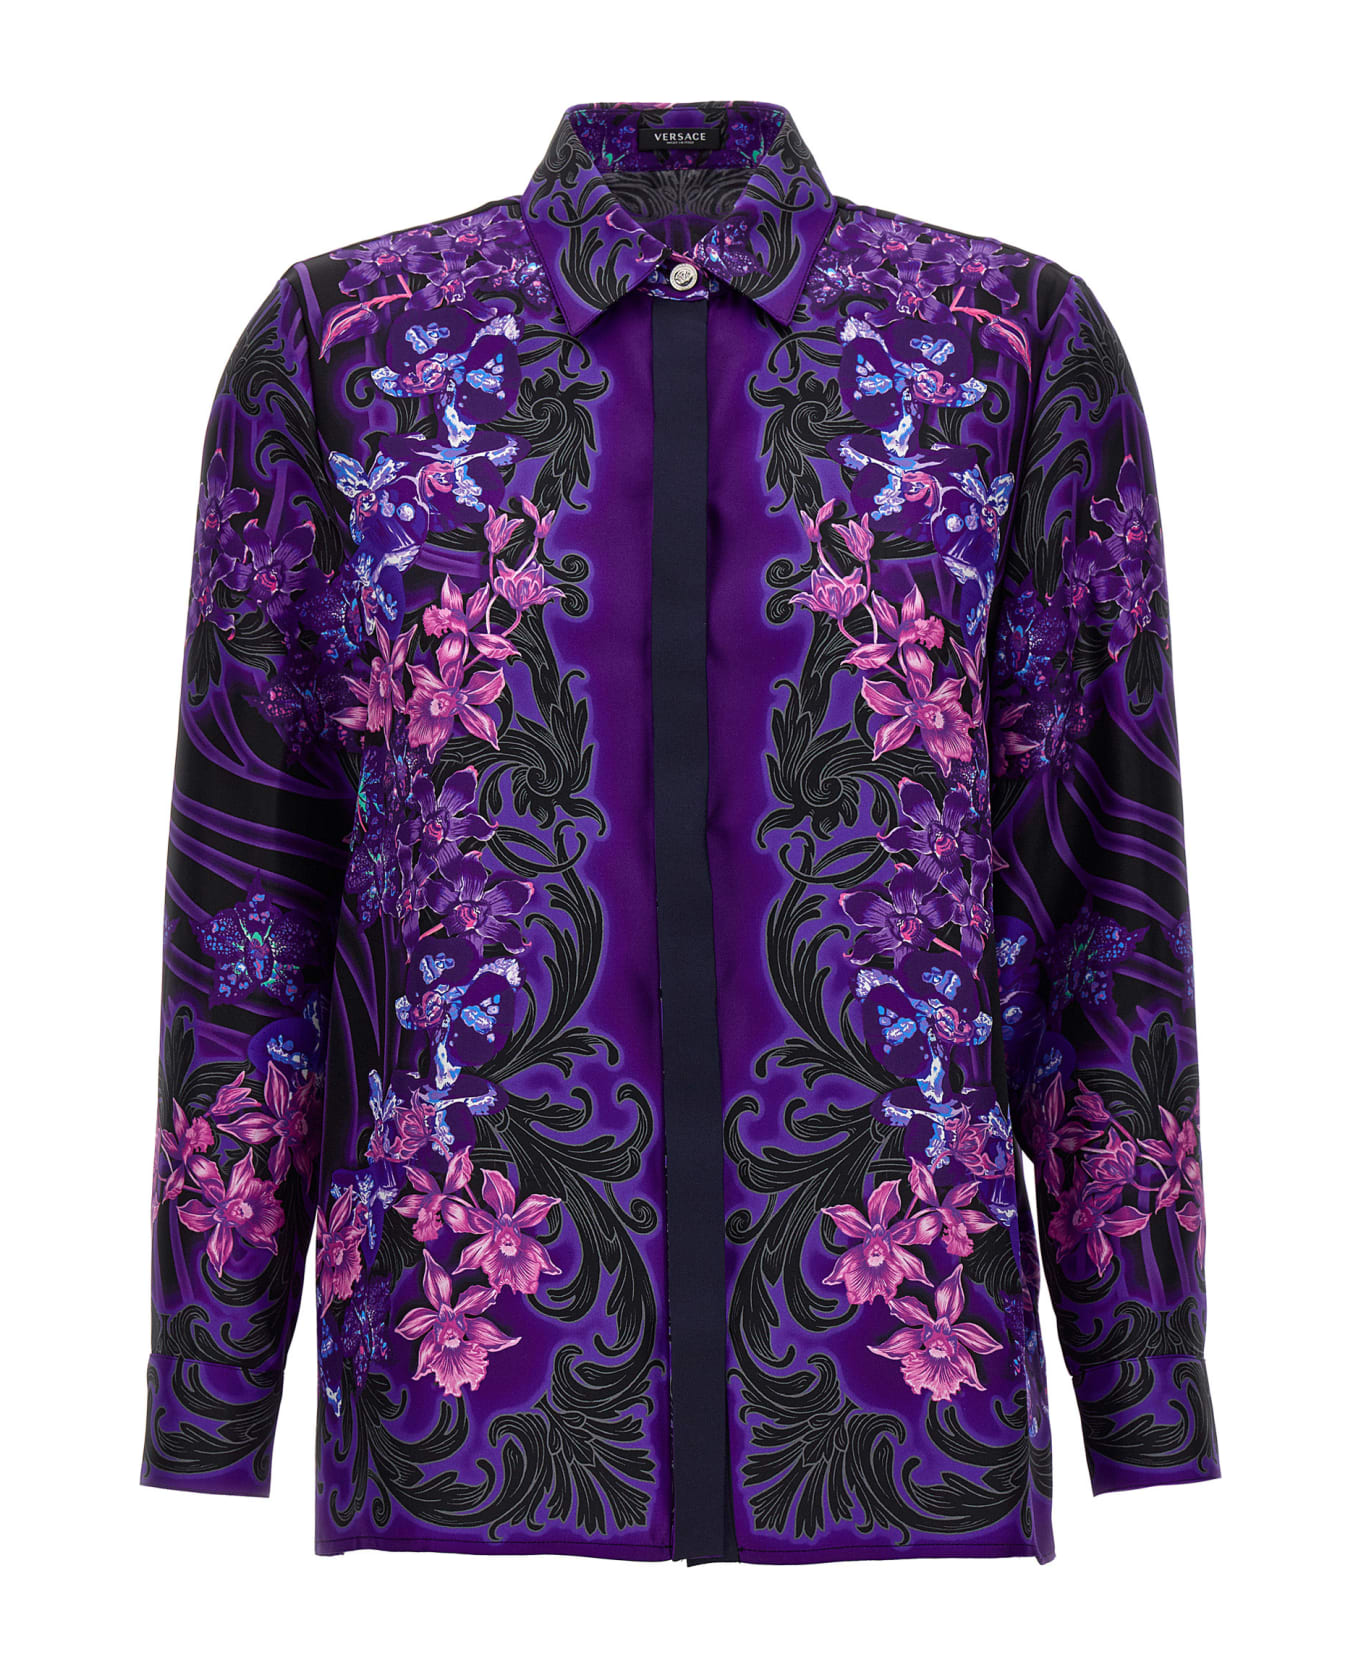 Versace 'barocco', 'barocco'shirt - Purple